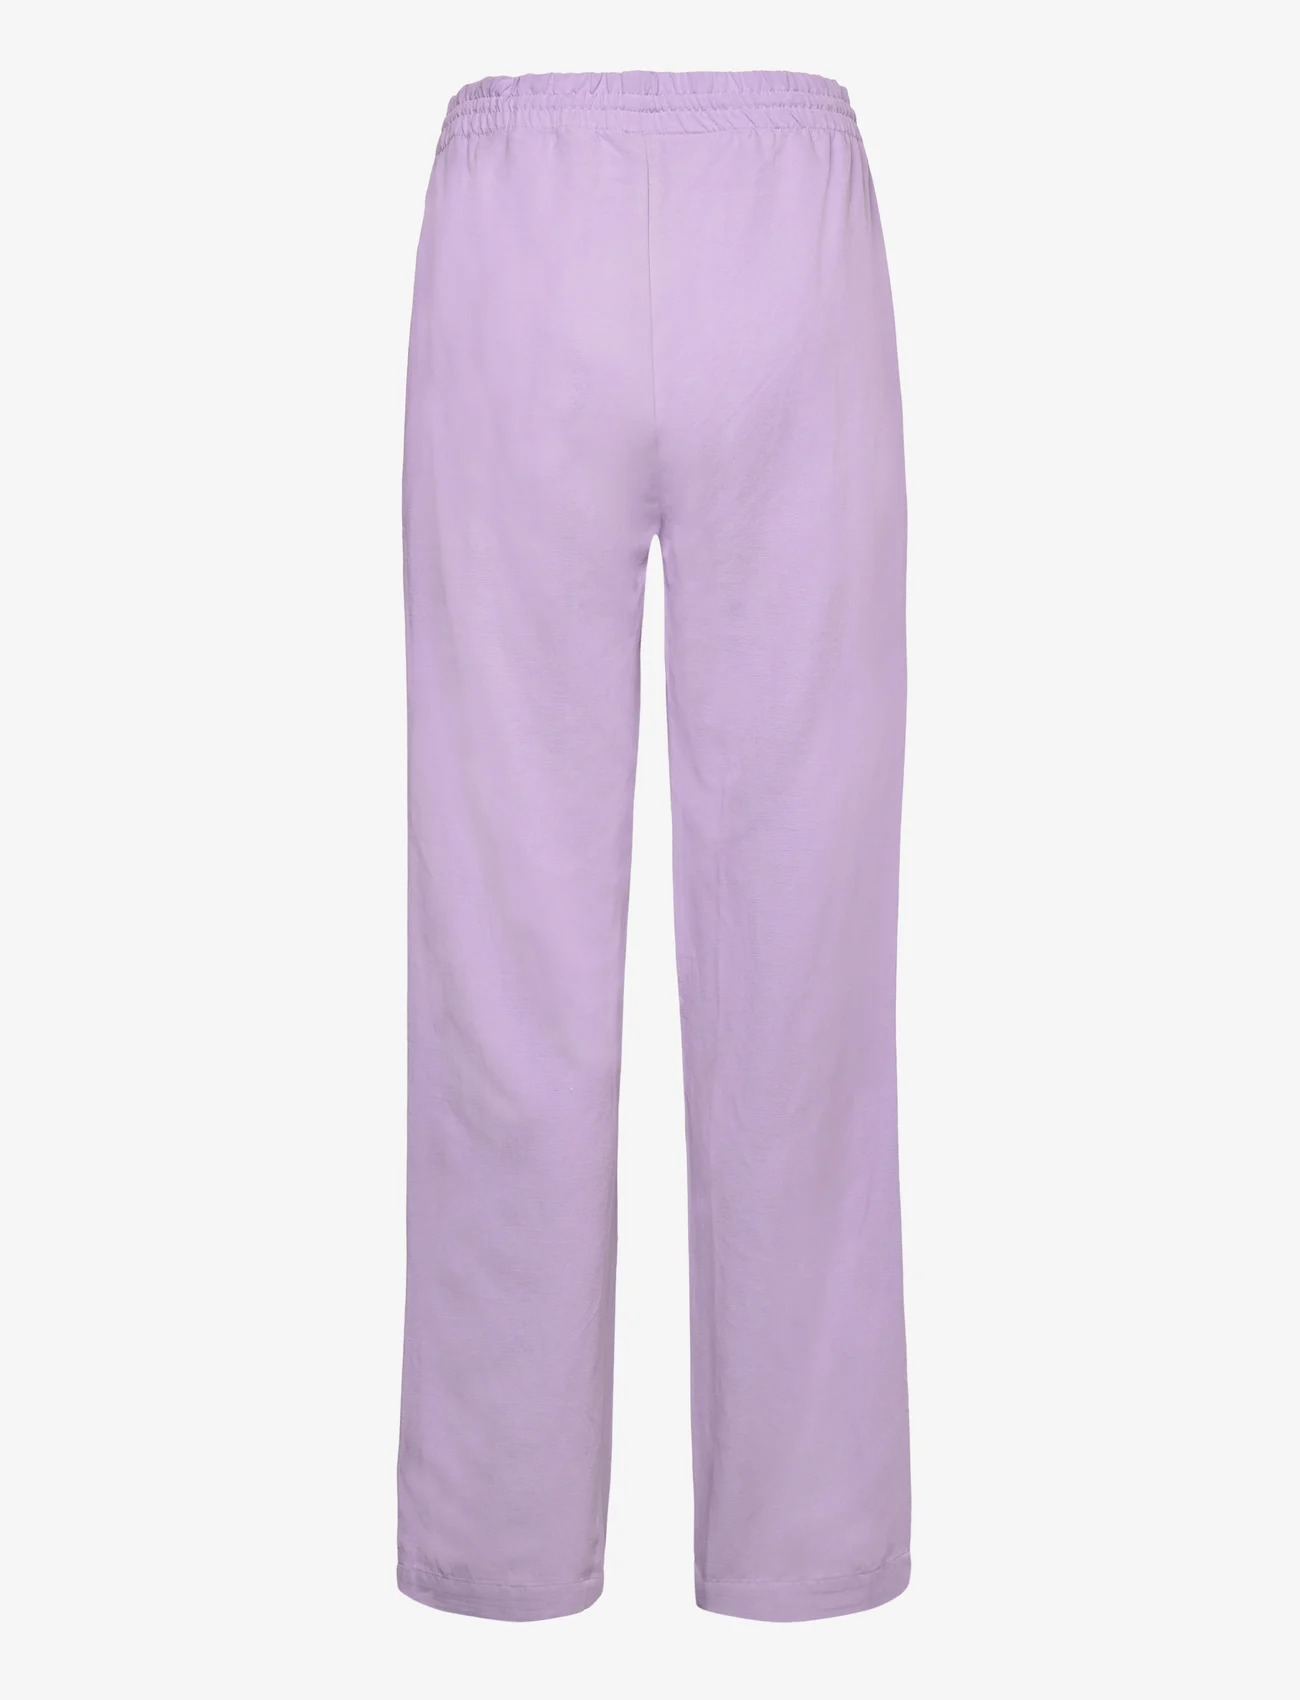 Envii - ENONYX PANTS 6903 - linen trousers - purple rose - 1